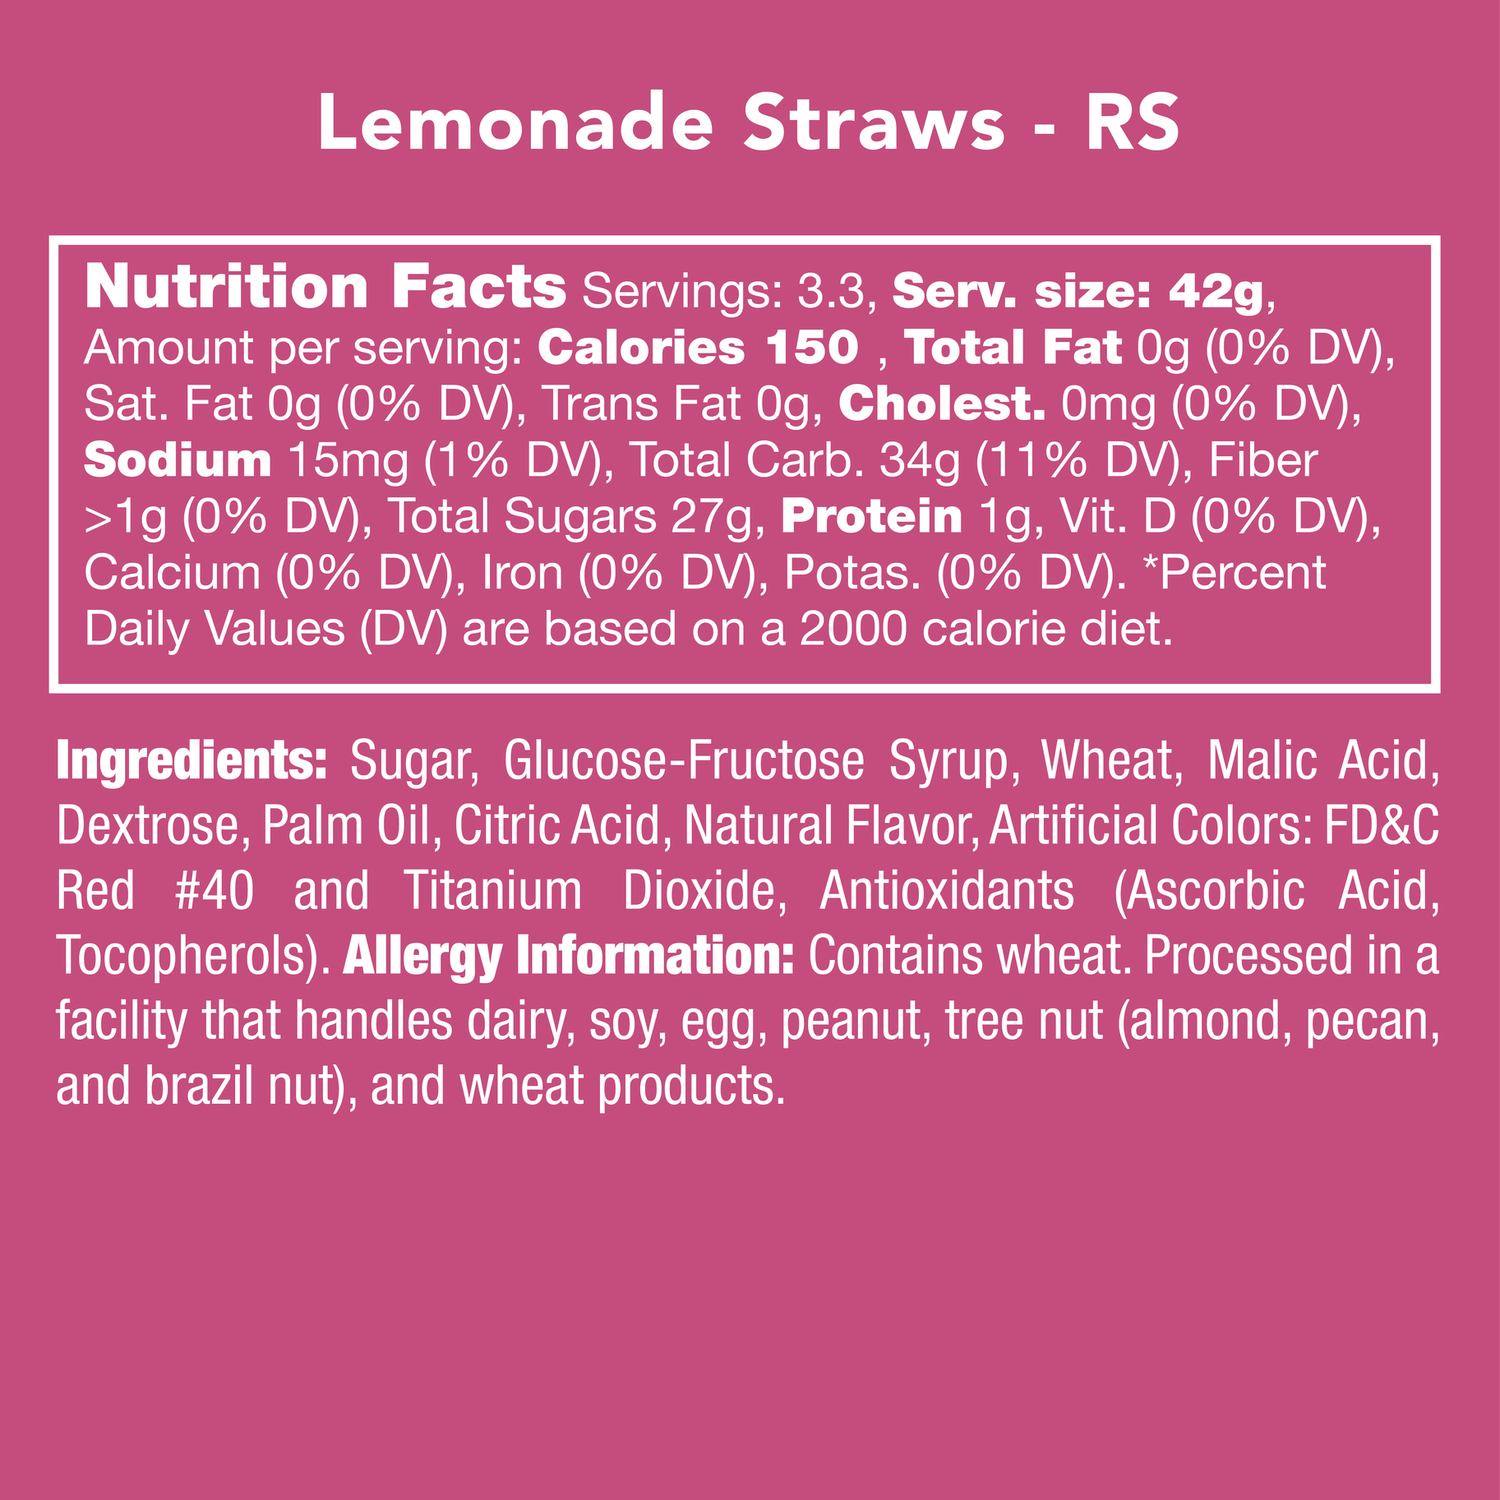 Lemonade Straws